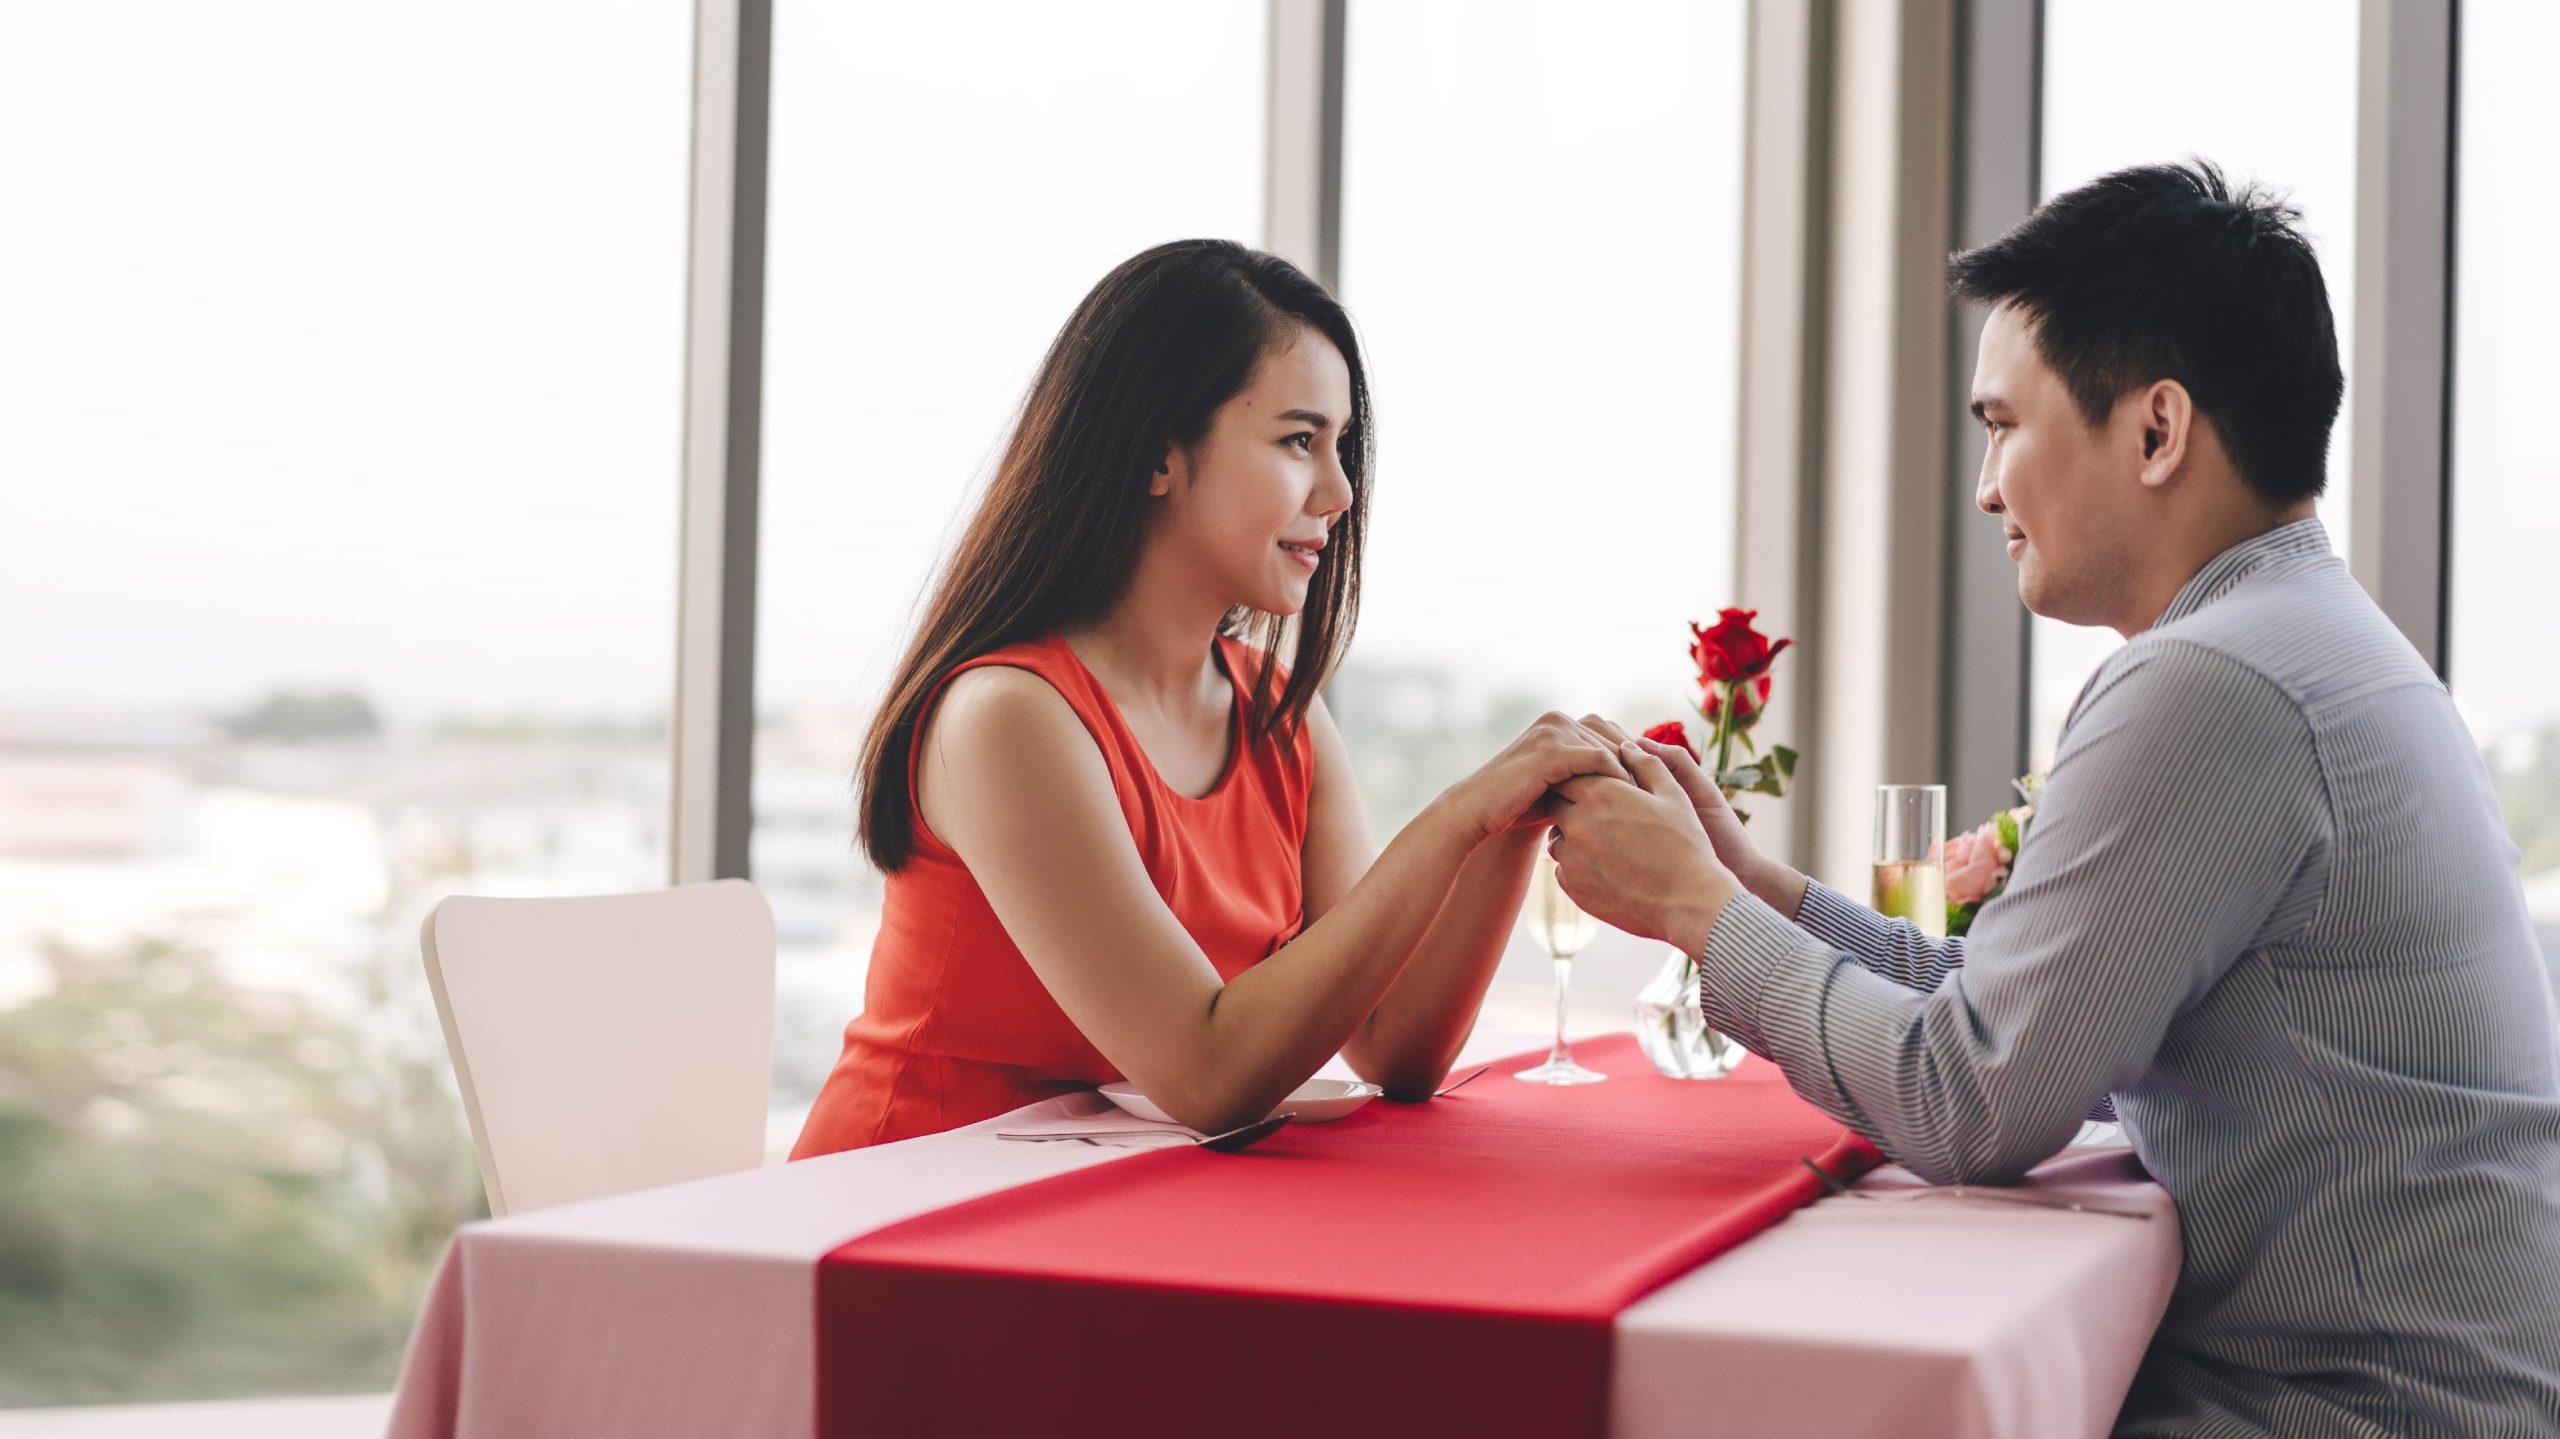 Romantic & Unique Restaurants in KL for Your Date Night